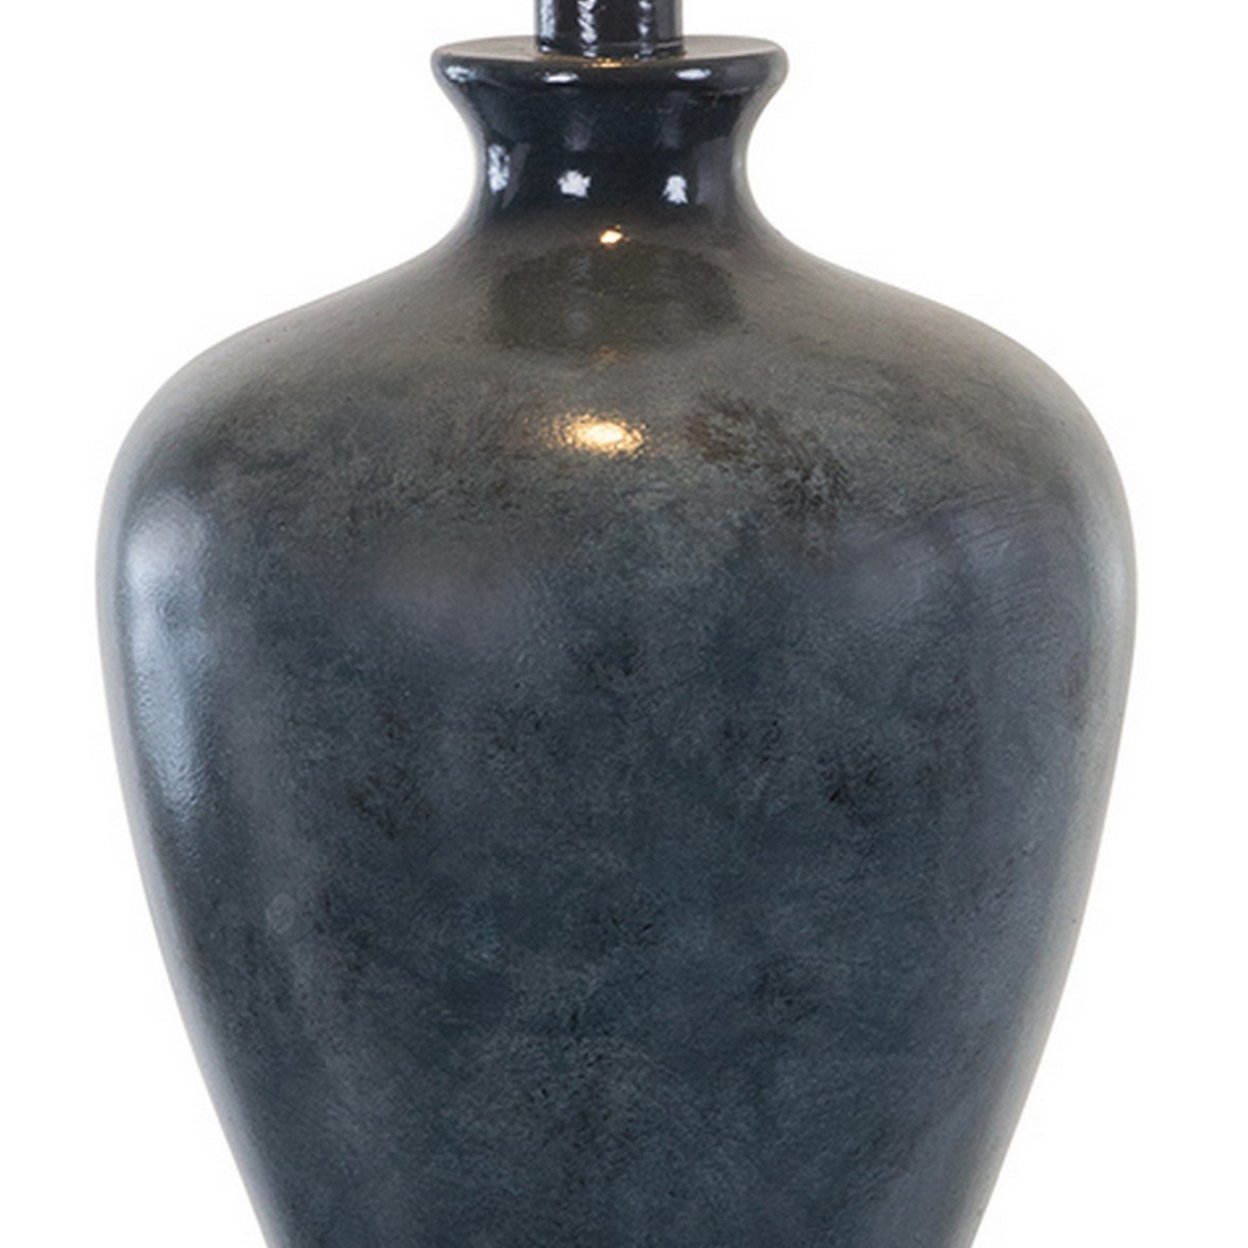 Kiza 29 Inch Table Lamp, Elongated Curved Urn, Dark Gray Stone Design- Saltoro Sherpi